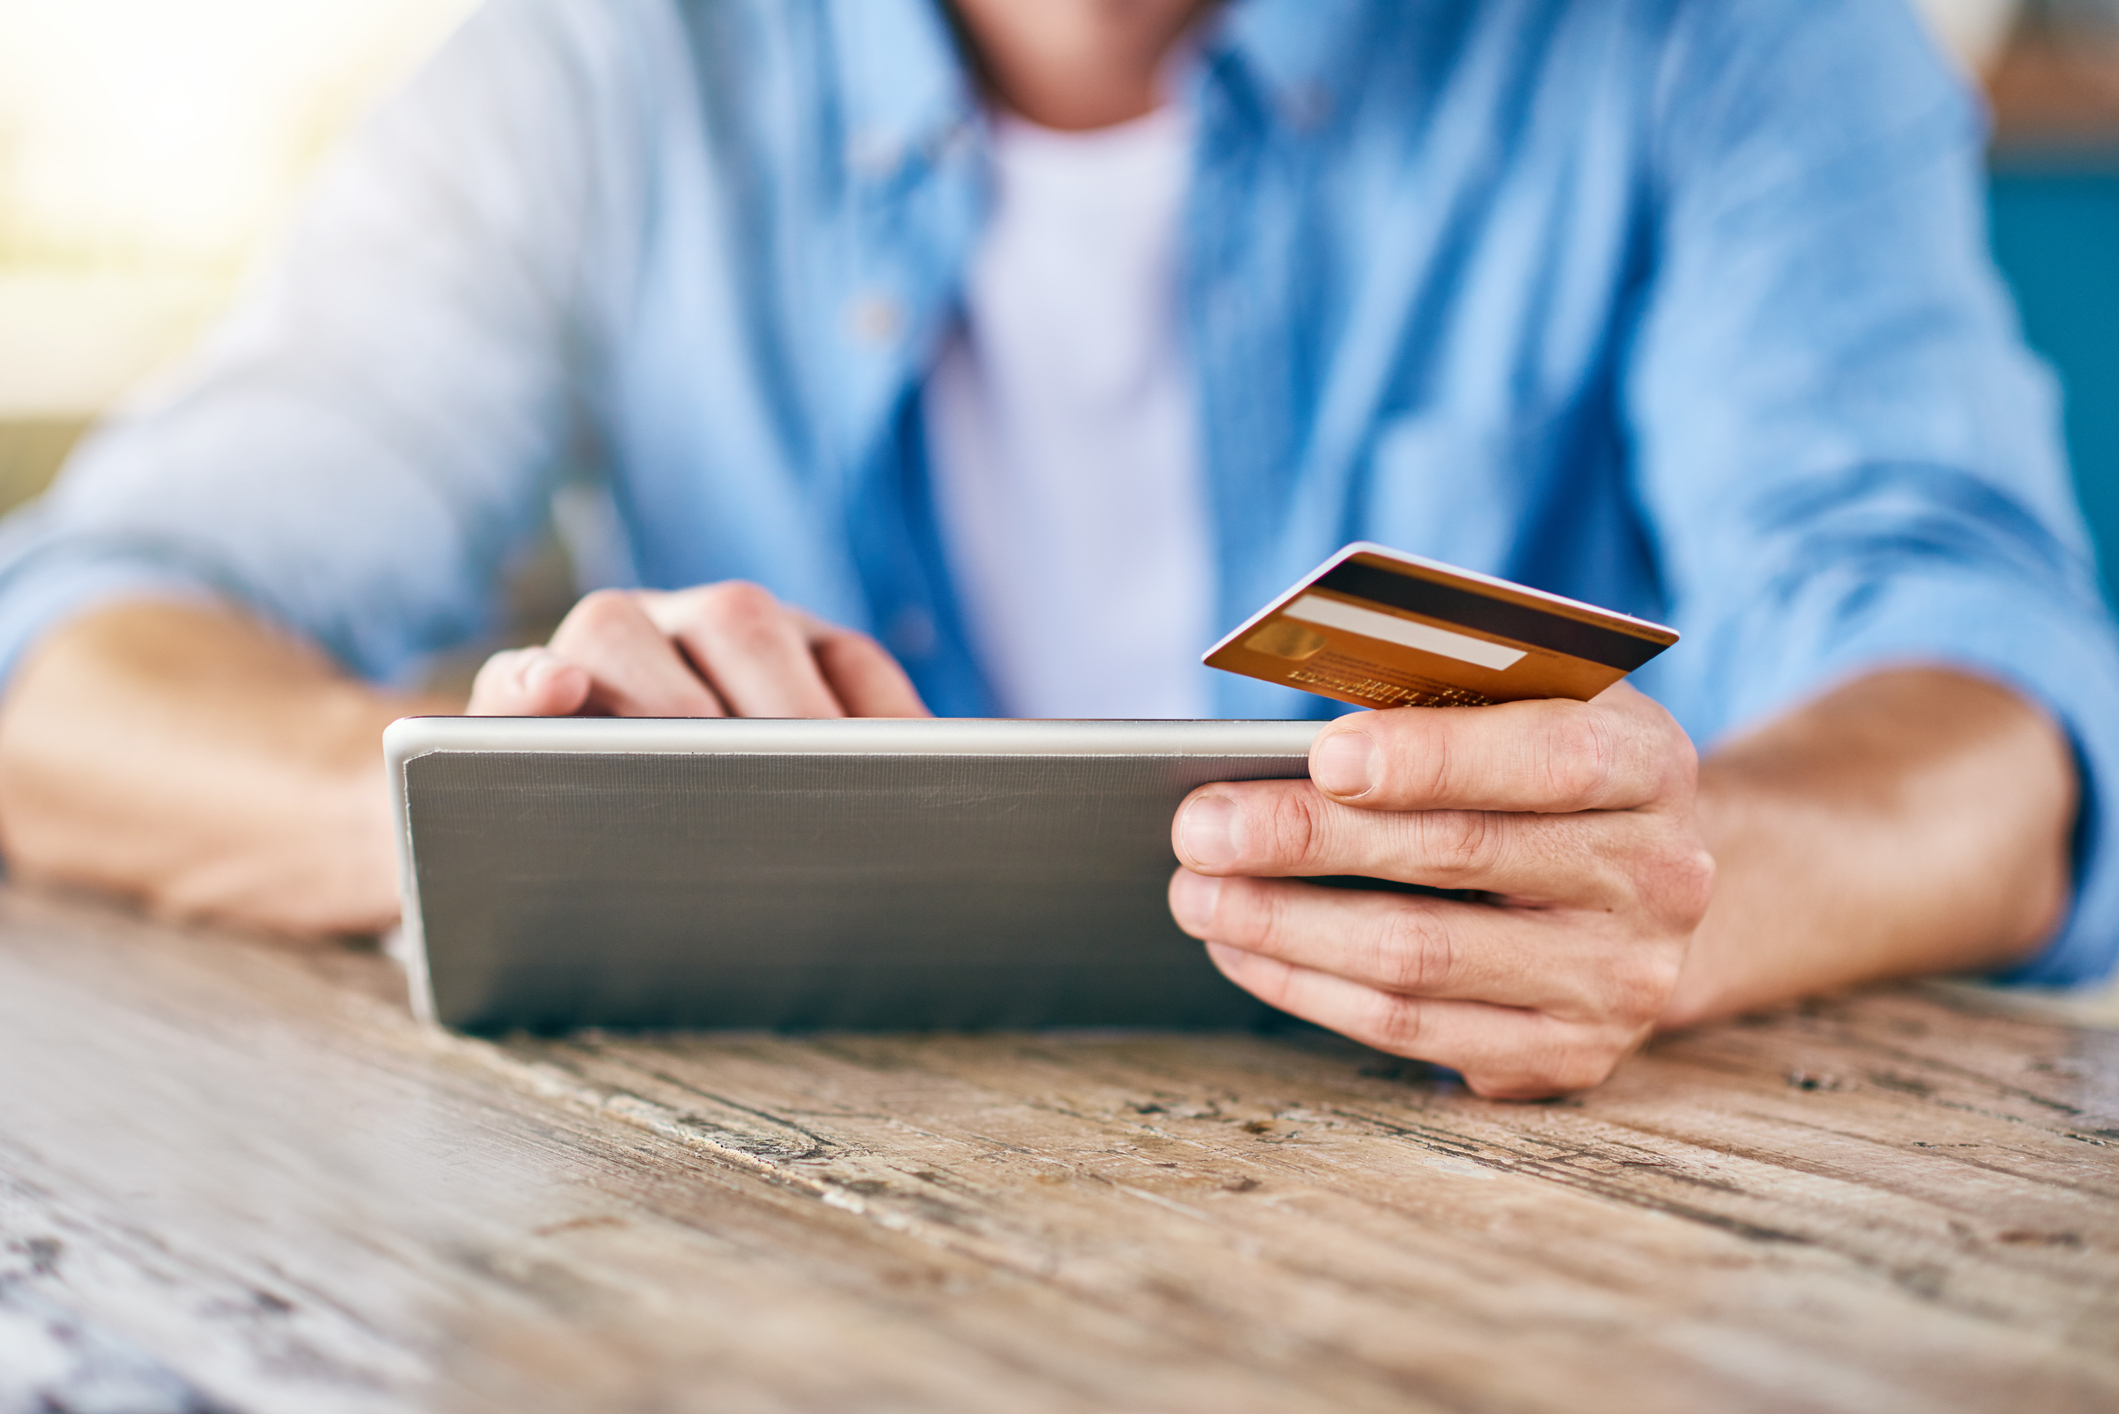 online-payment-credit-card-tablet.jpg